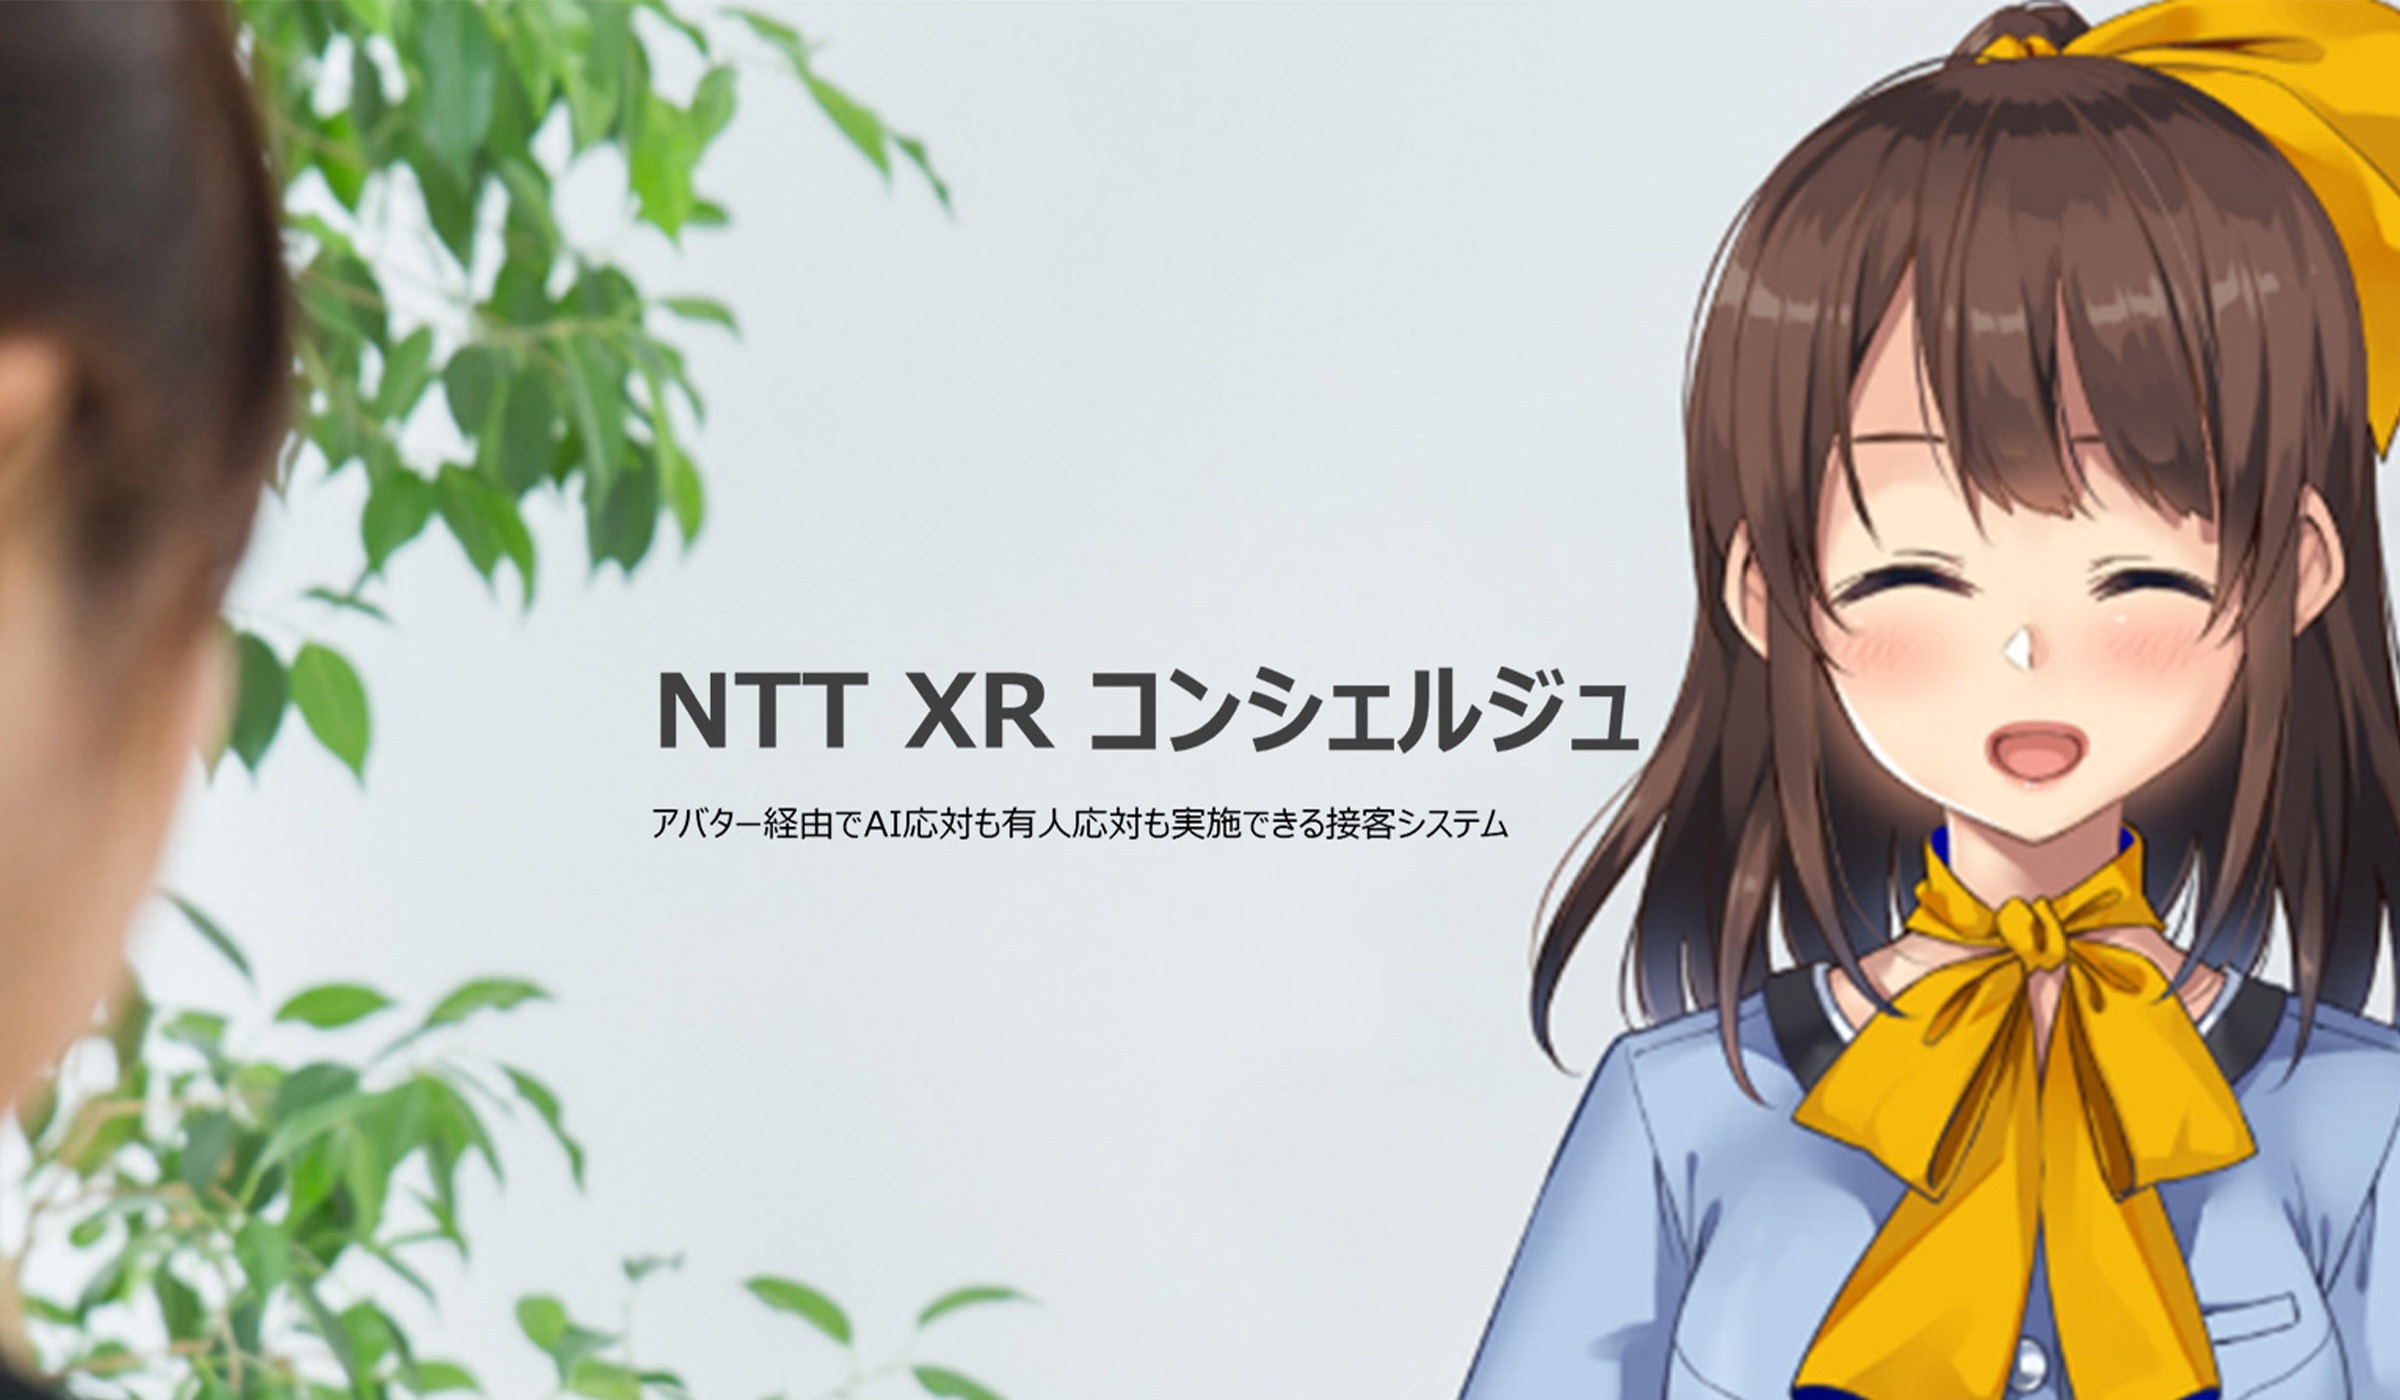 NTT XR コンシェルジュ